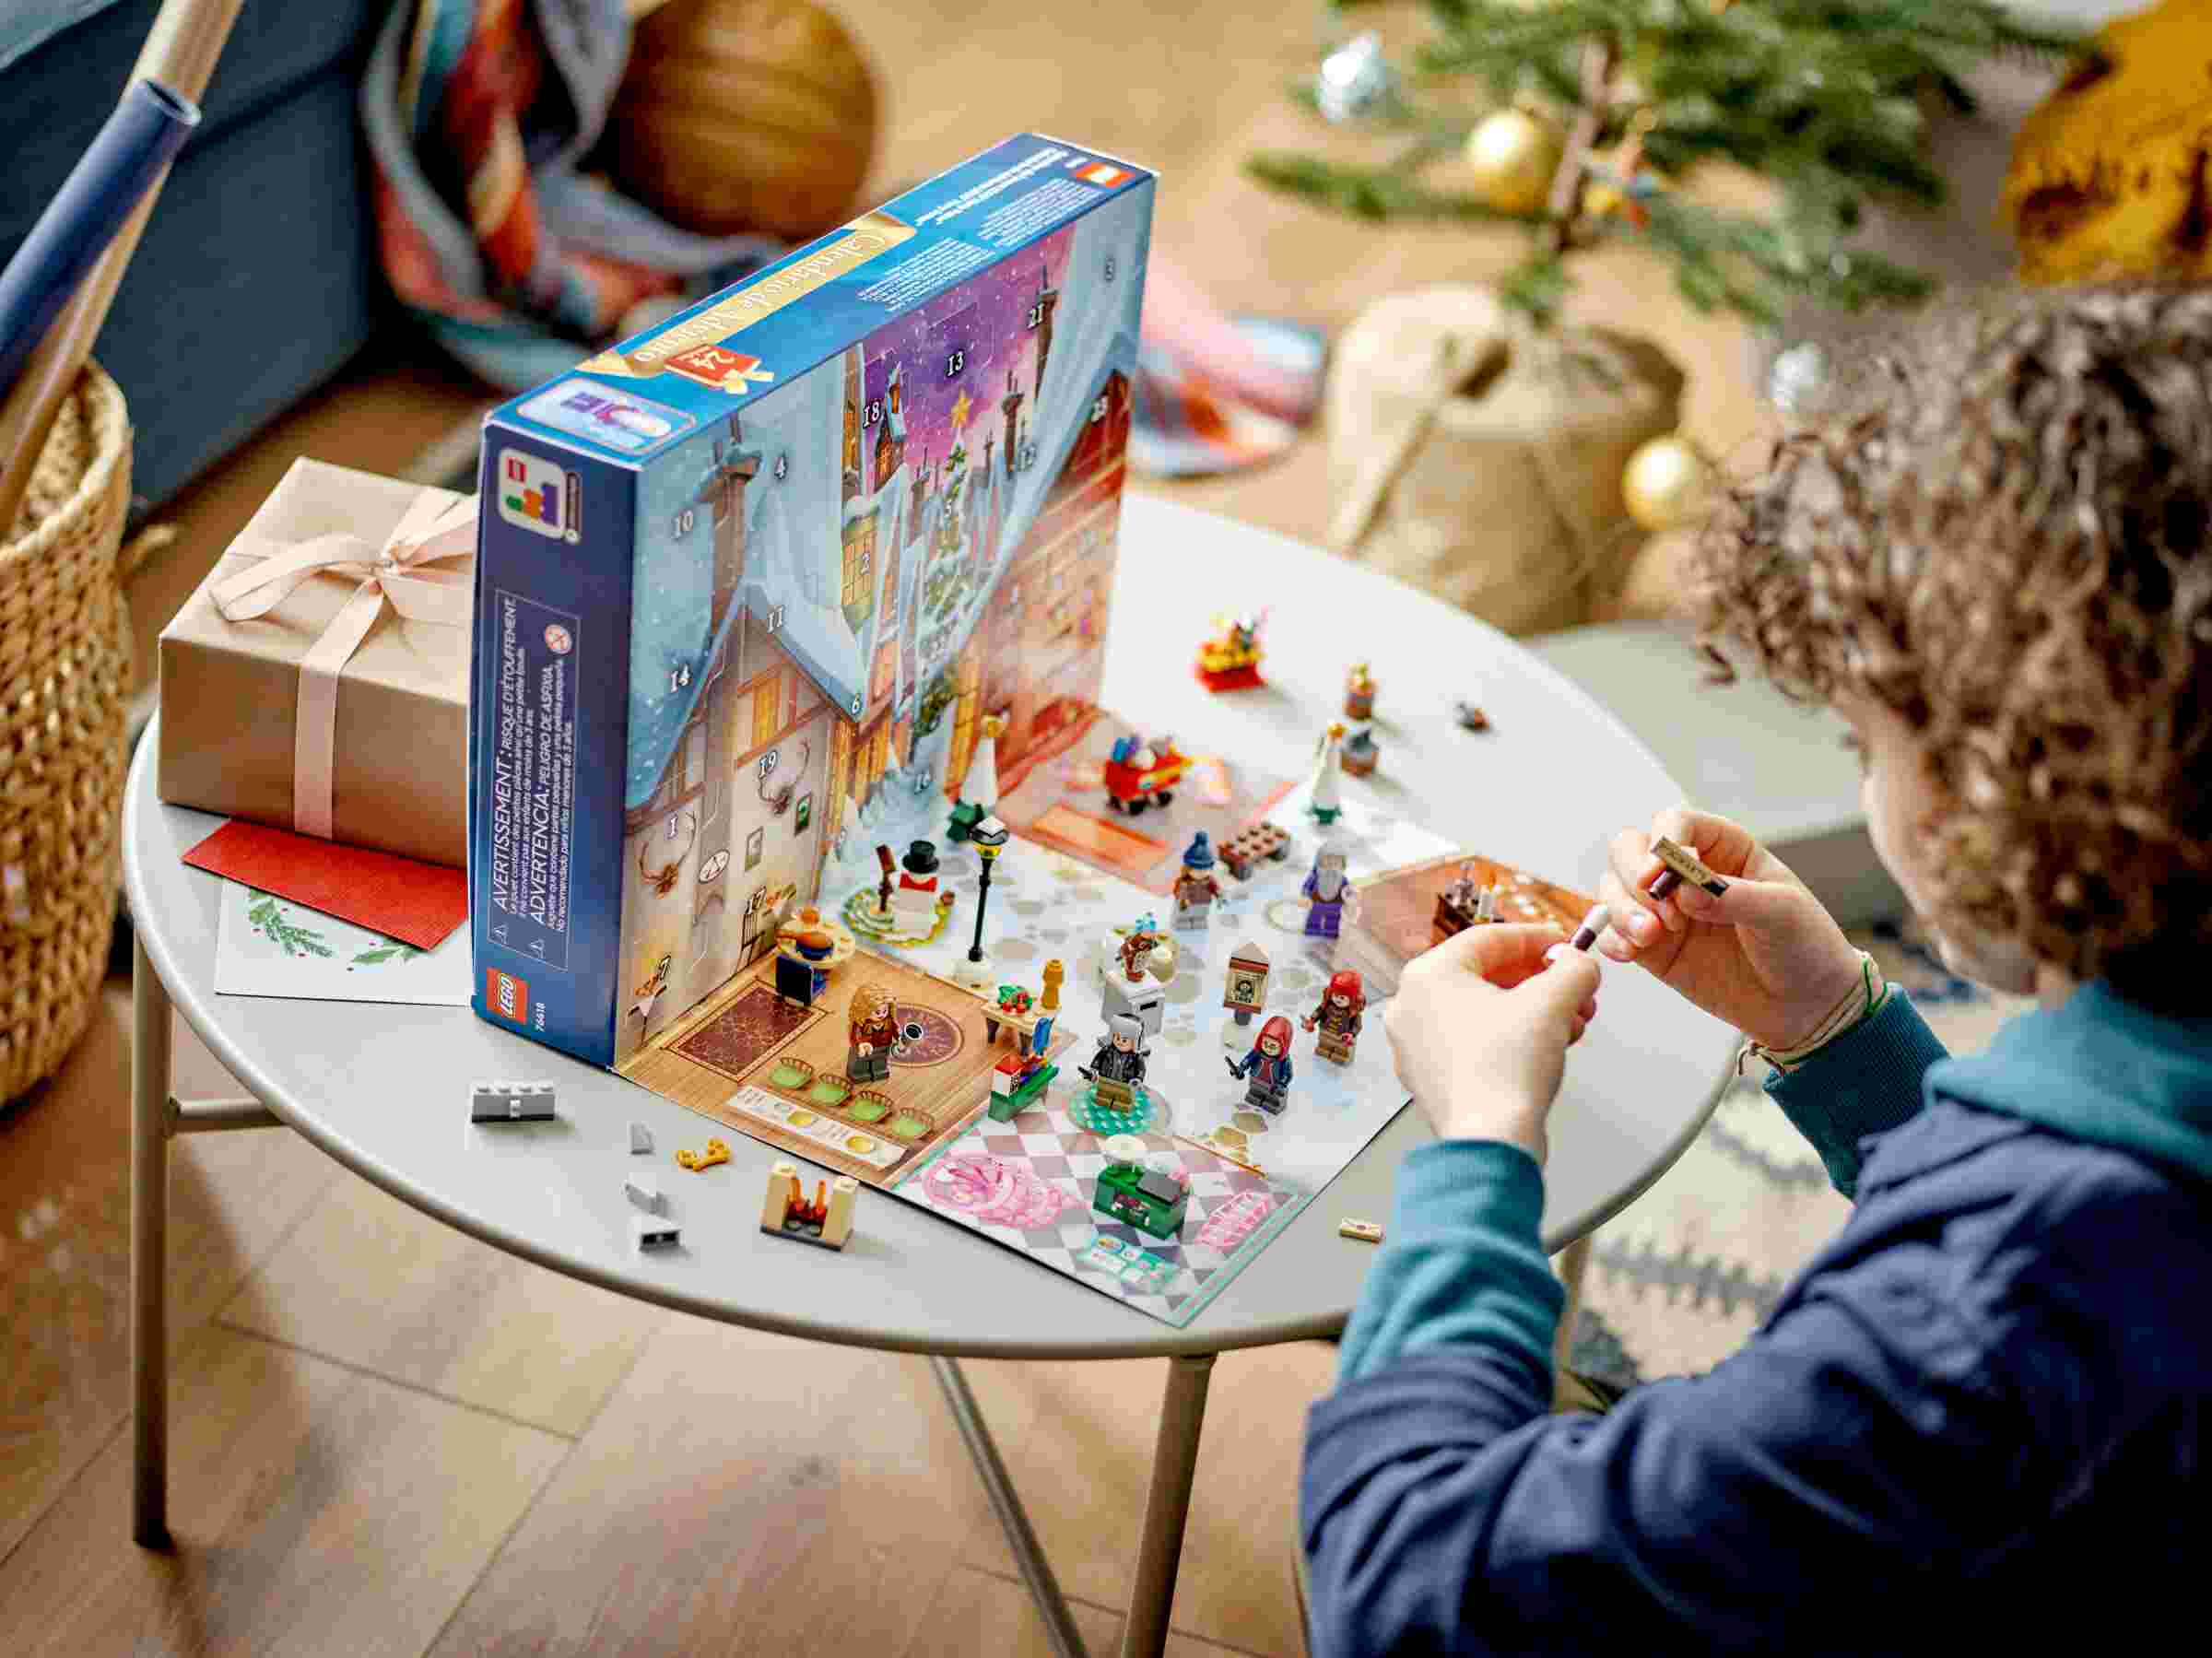 LEGO 76418 Harry Potter Adventskalender, 6 Minifiguren 18 Mini-Modelle von Orten